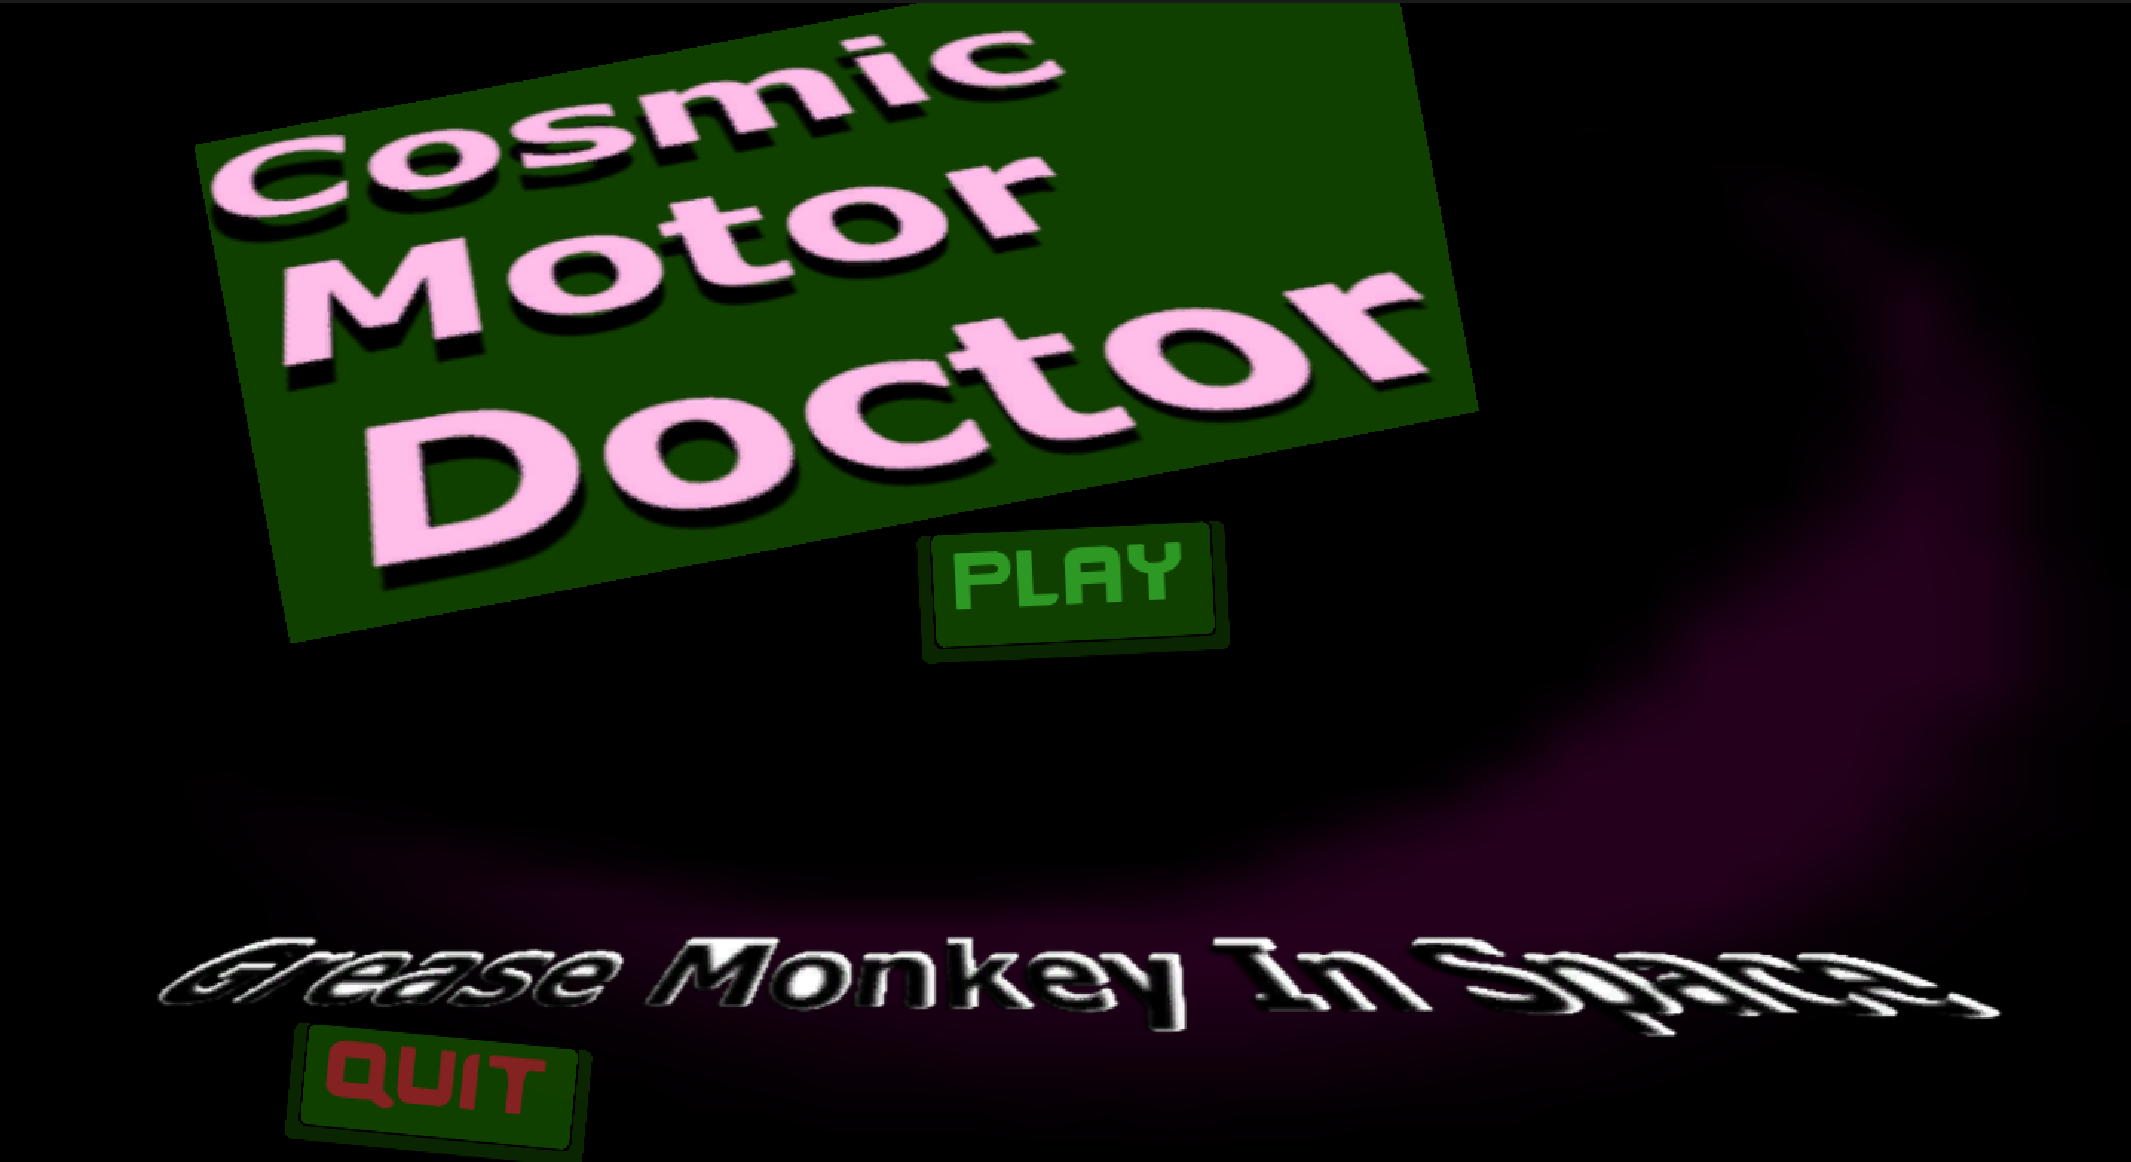 Cosmic Motor Doctor